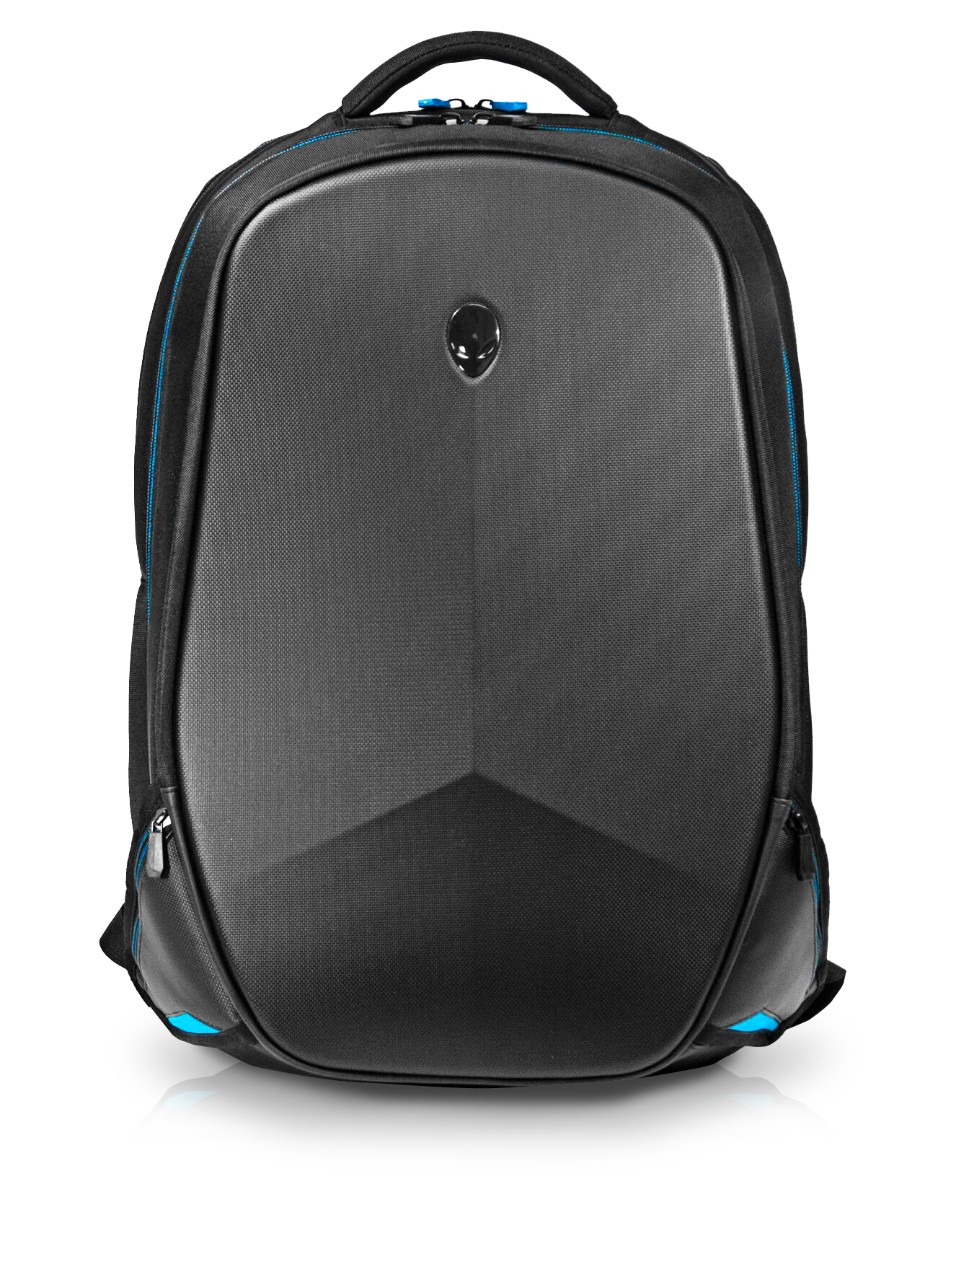 Alienware Vindicator Backpack Fits Laptop up to 17-inch